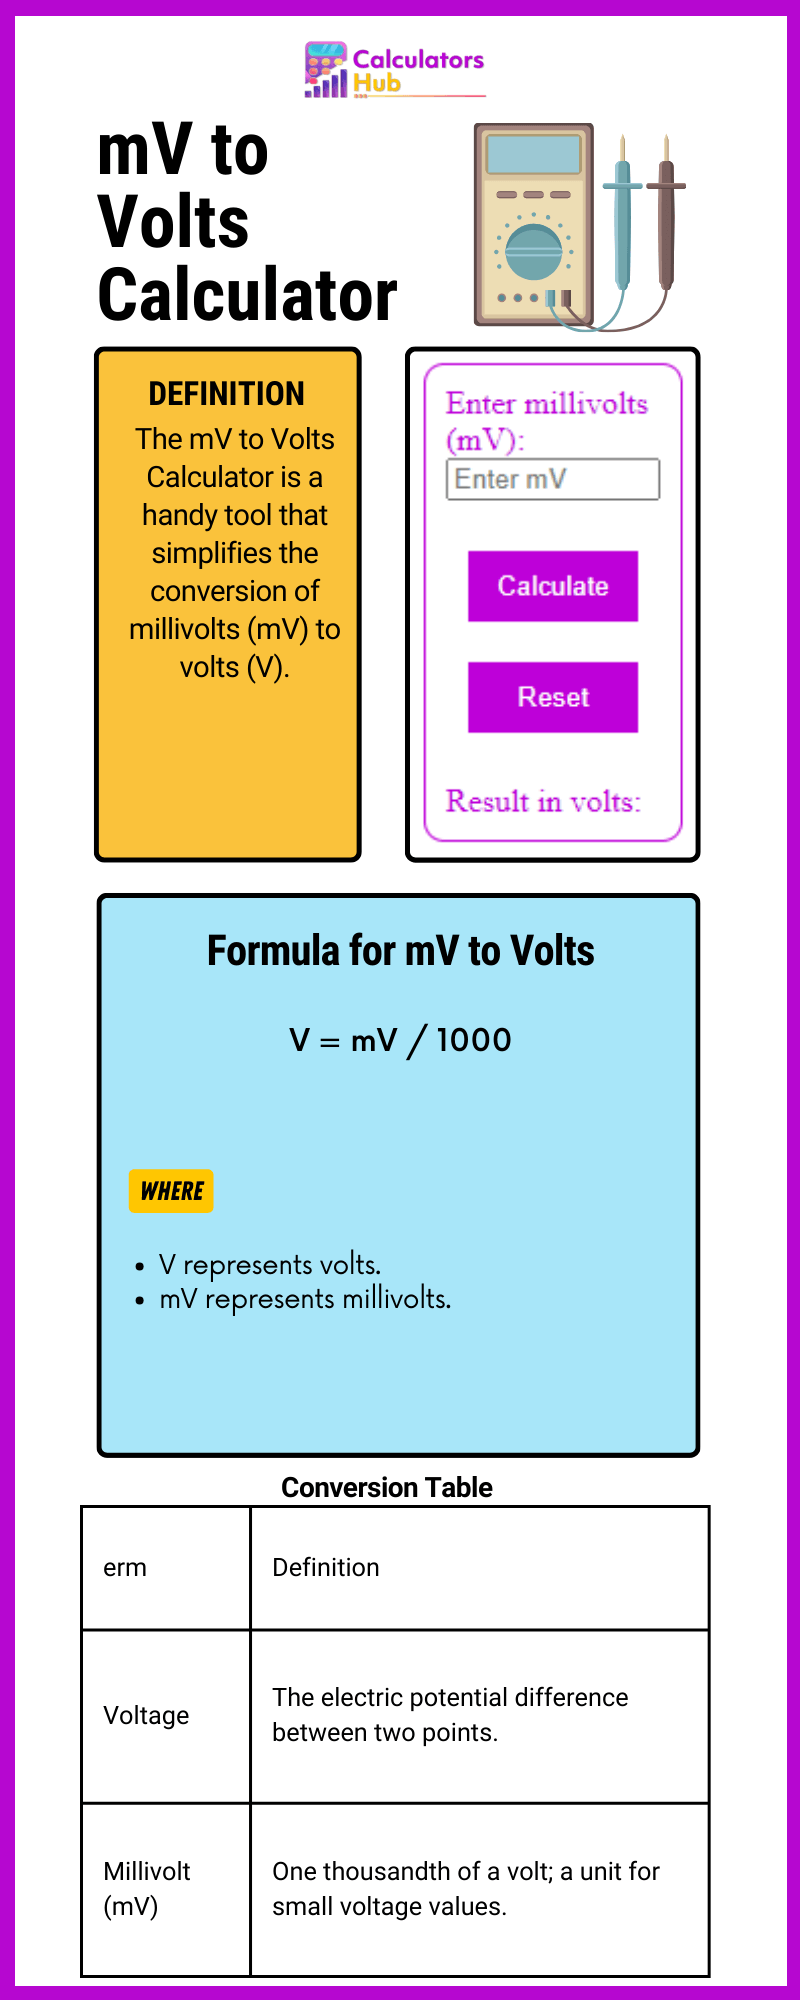 mV to Volts Calculator